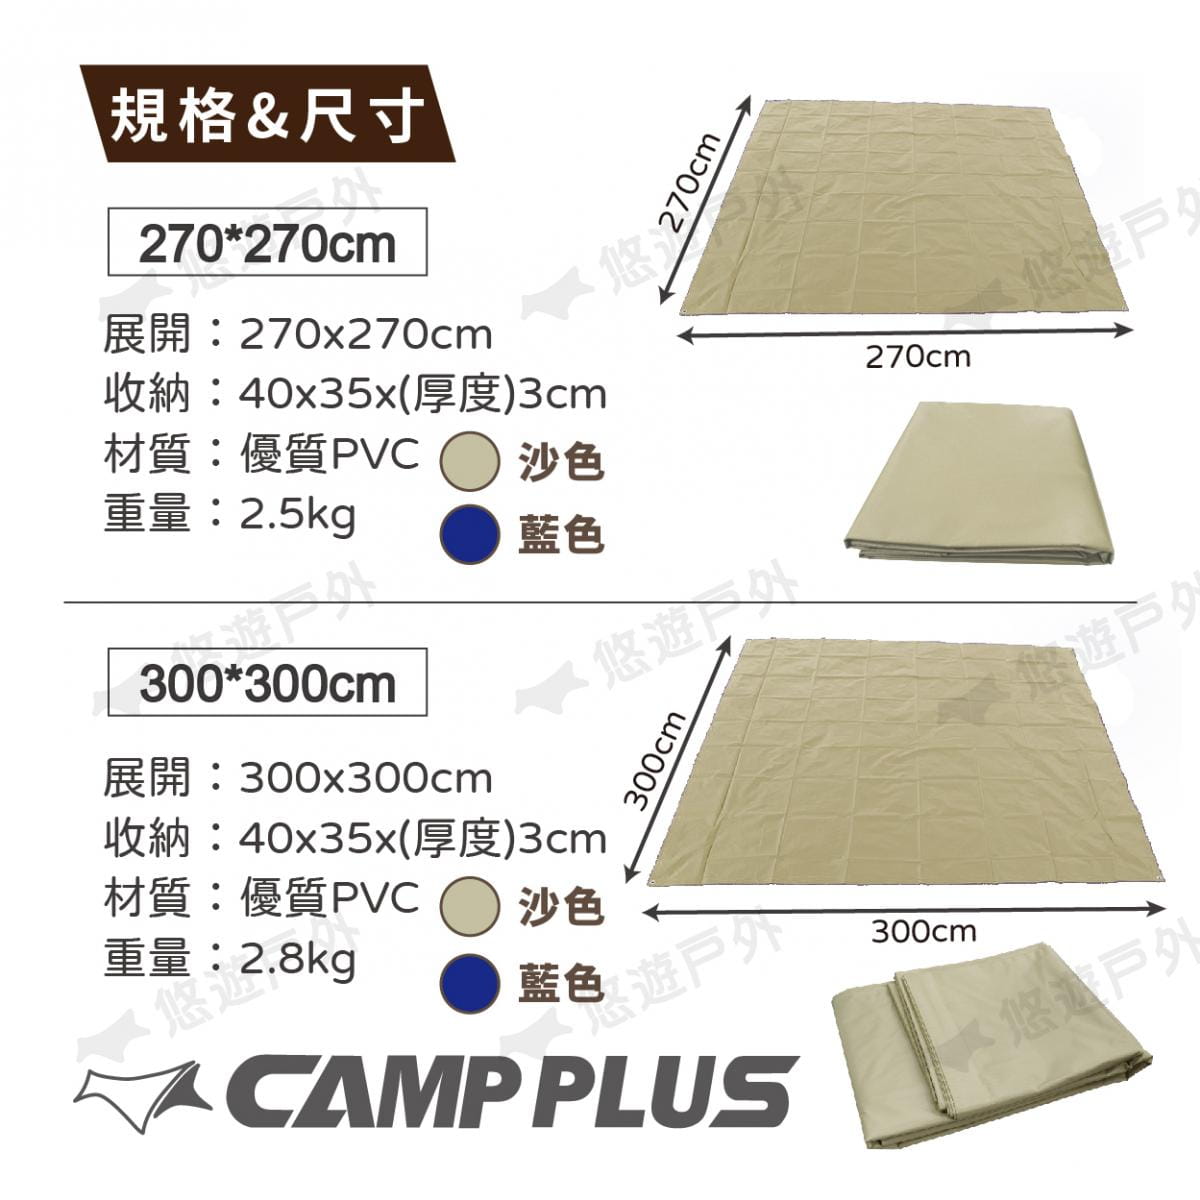 【Camp Plus】【CAMP PLUS】PVC地墊 藍色地布_270x270_含大網袋 (悠遊戶外) 7